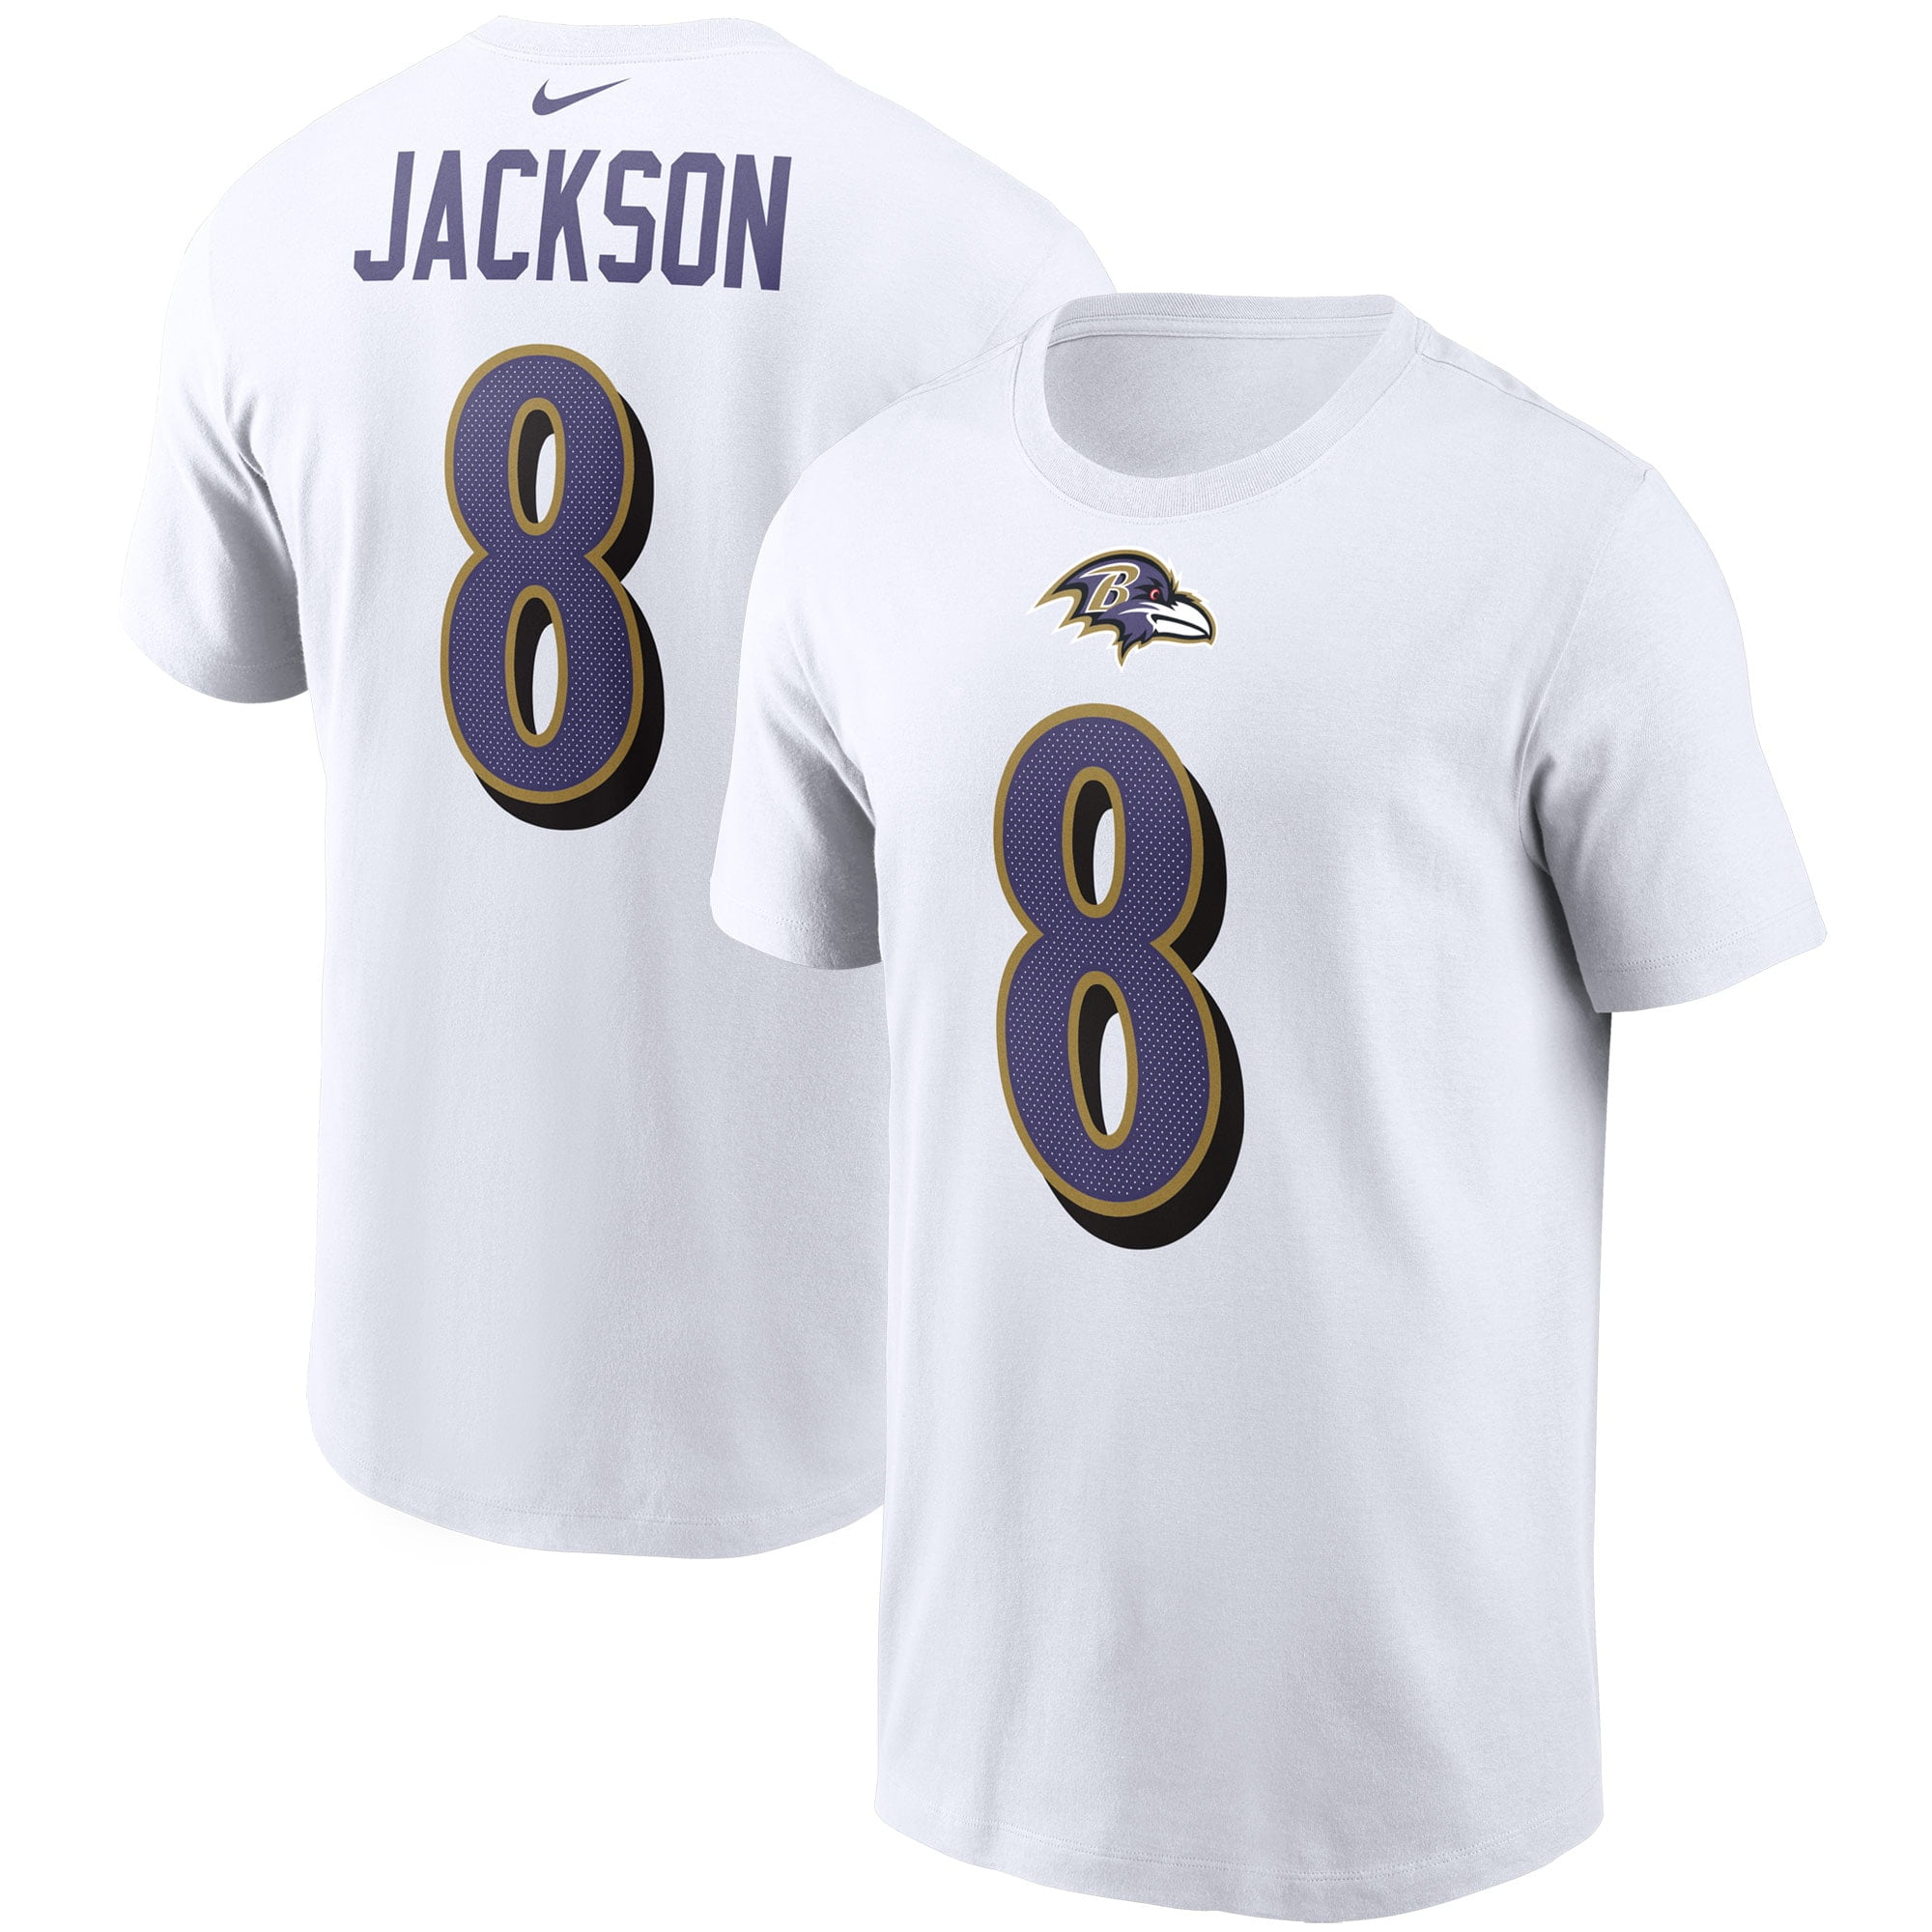 Baltimore Ravens T-Shirts - Walmart.com